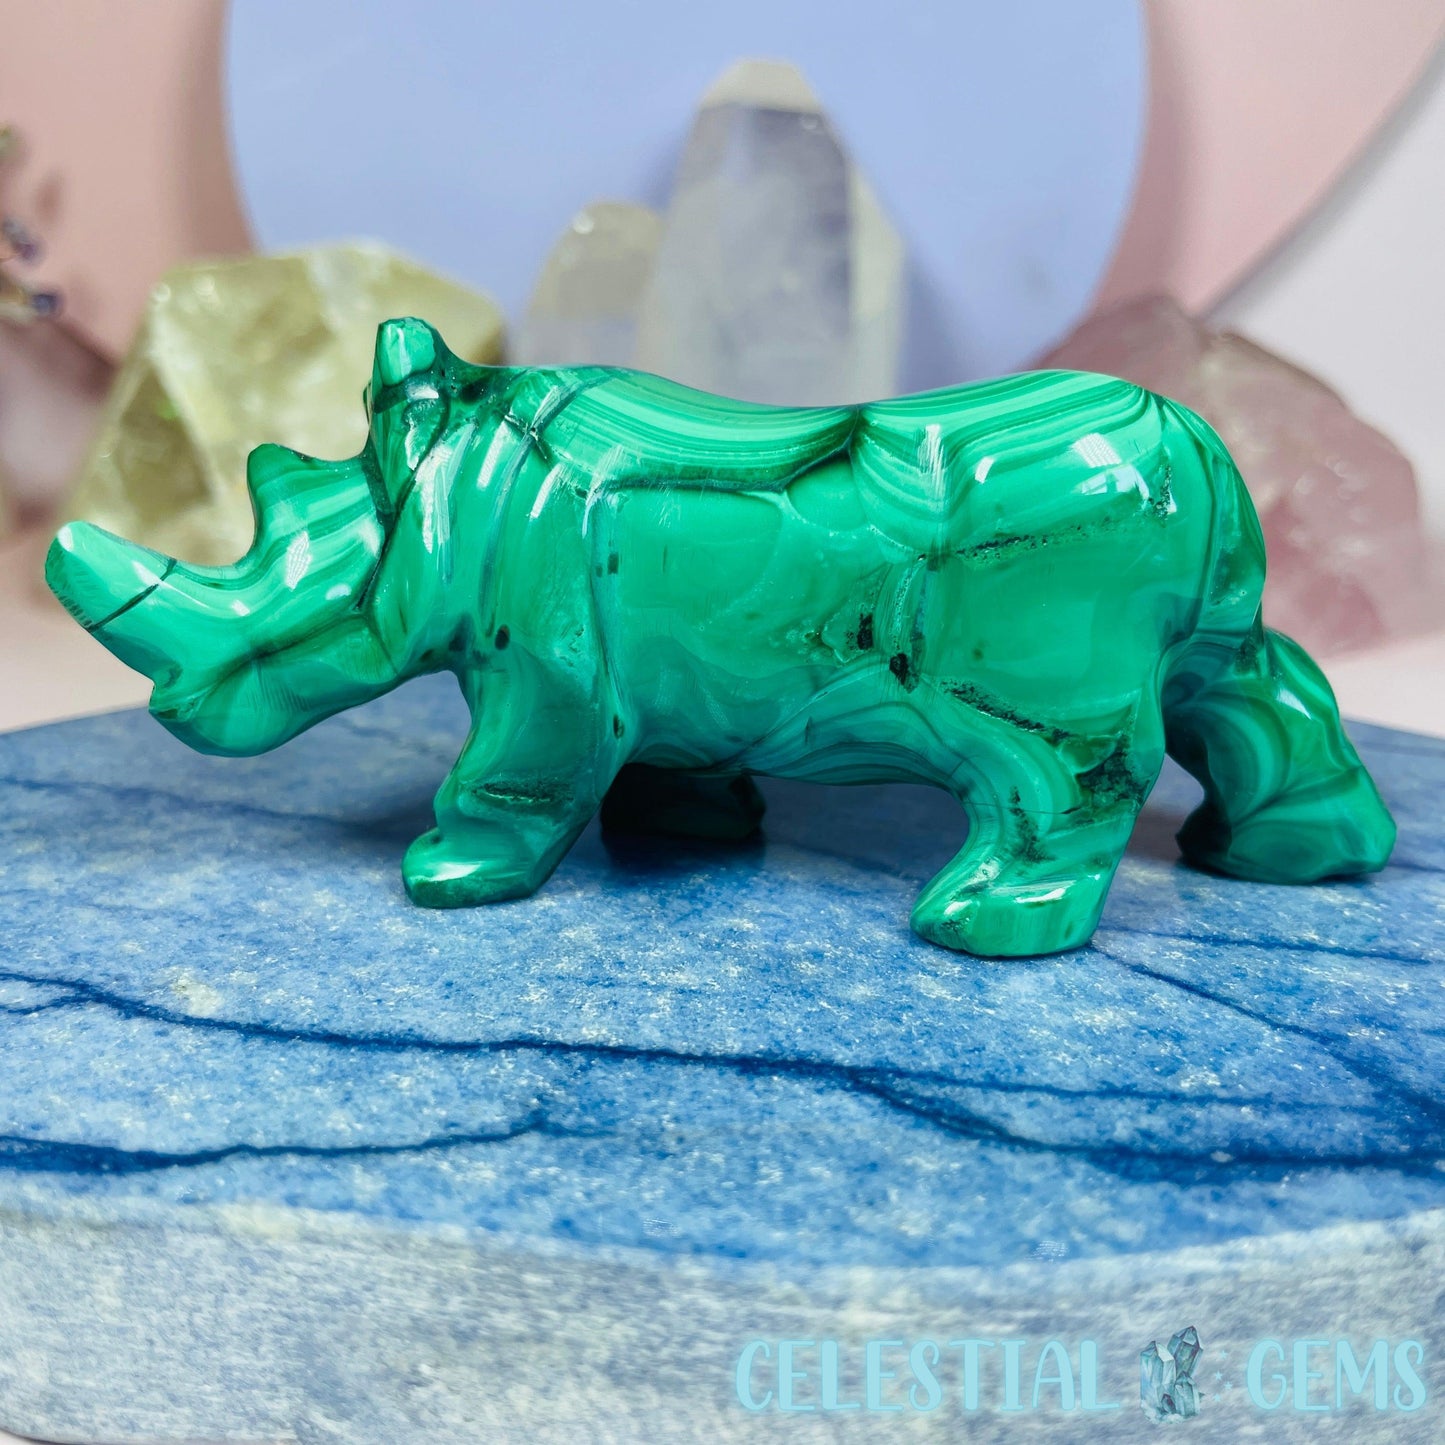 Malachite Rhinoceros Medium Carving E